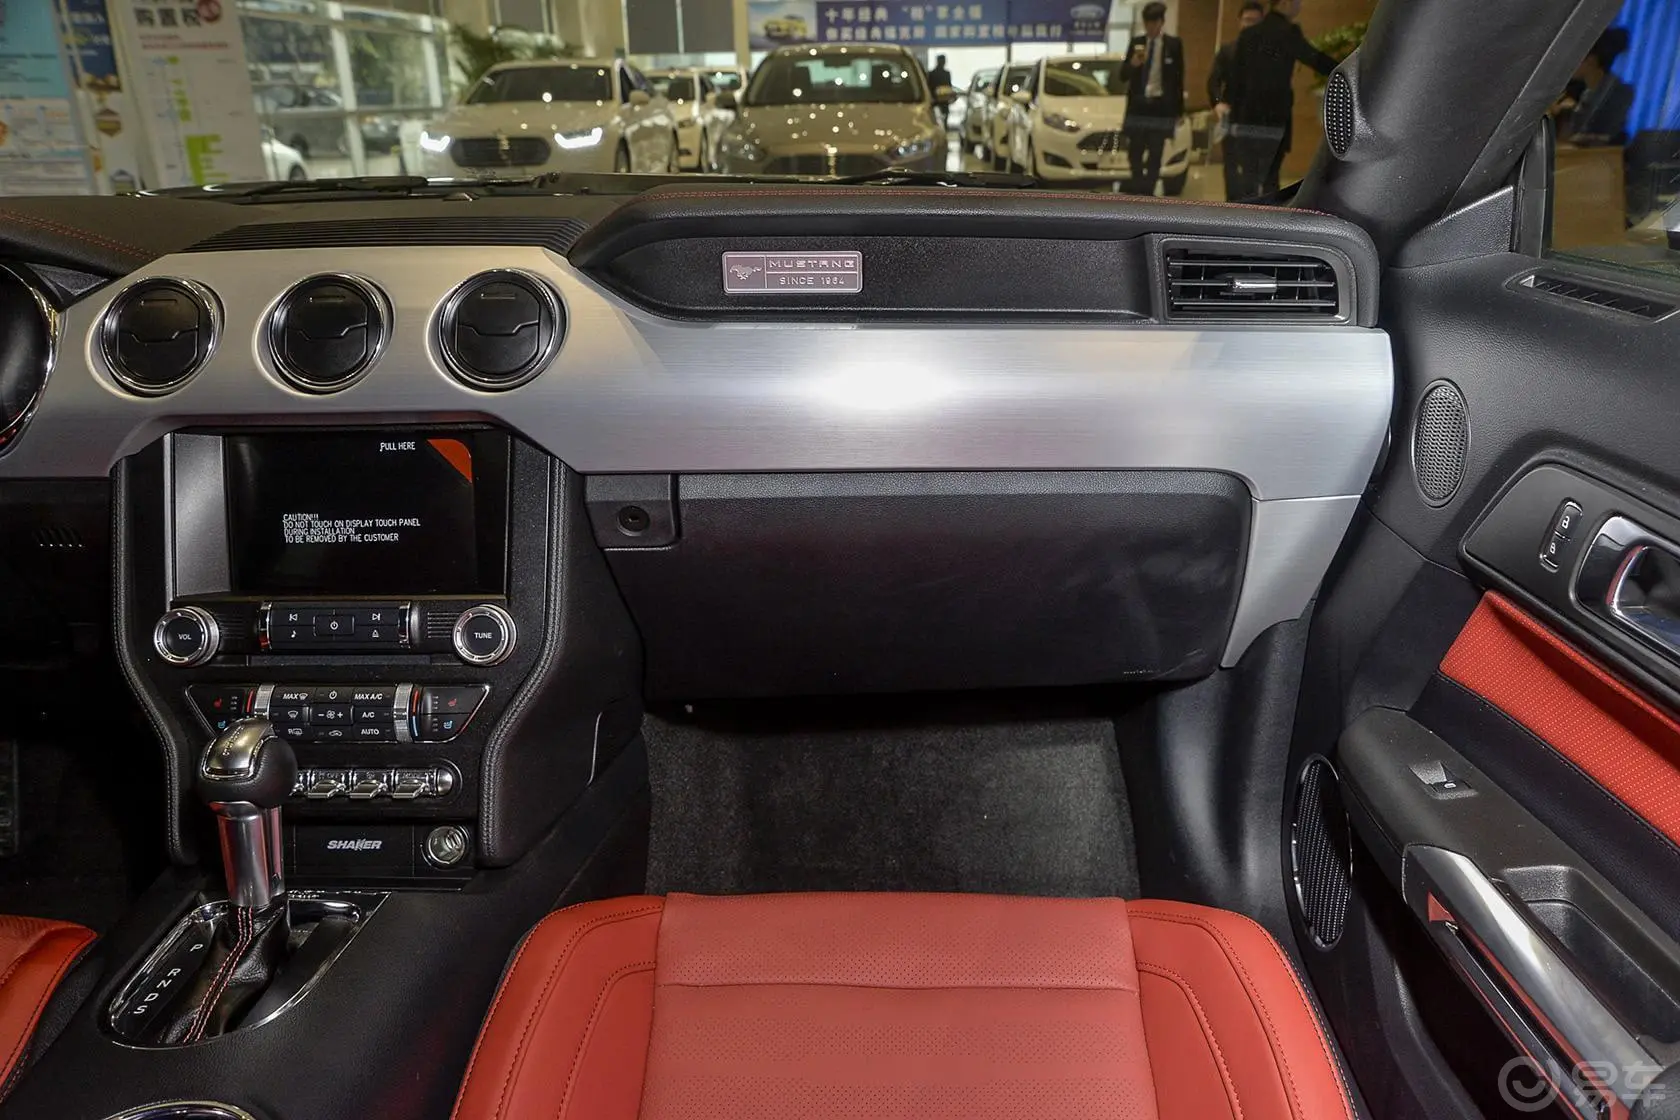 Mustang5.0L GT 手自一体 运动版内饰